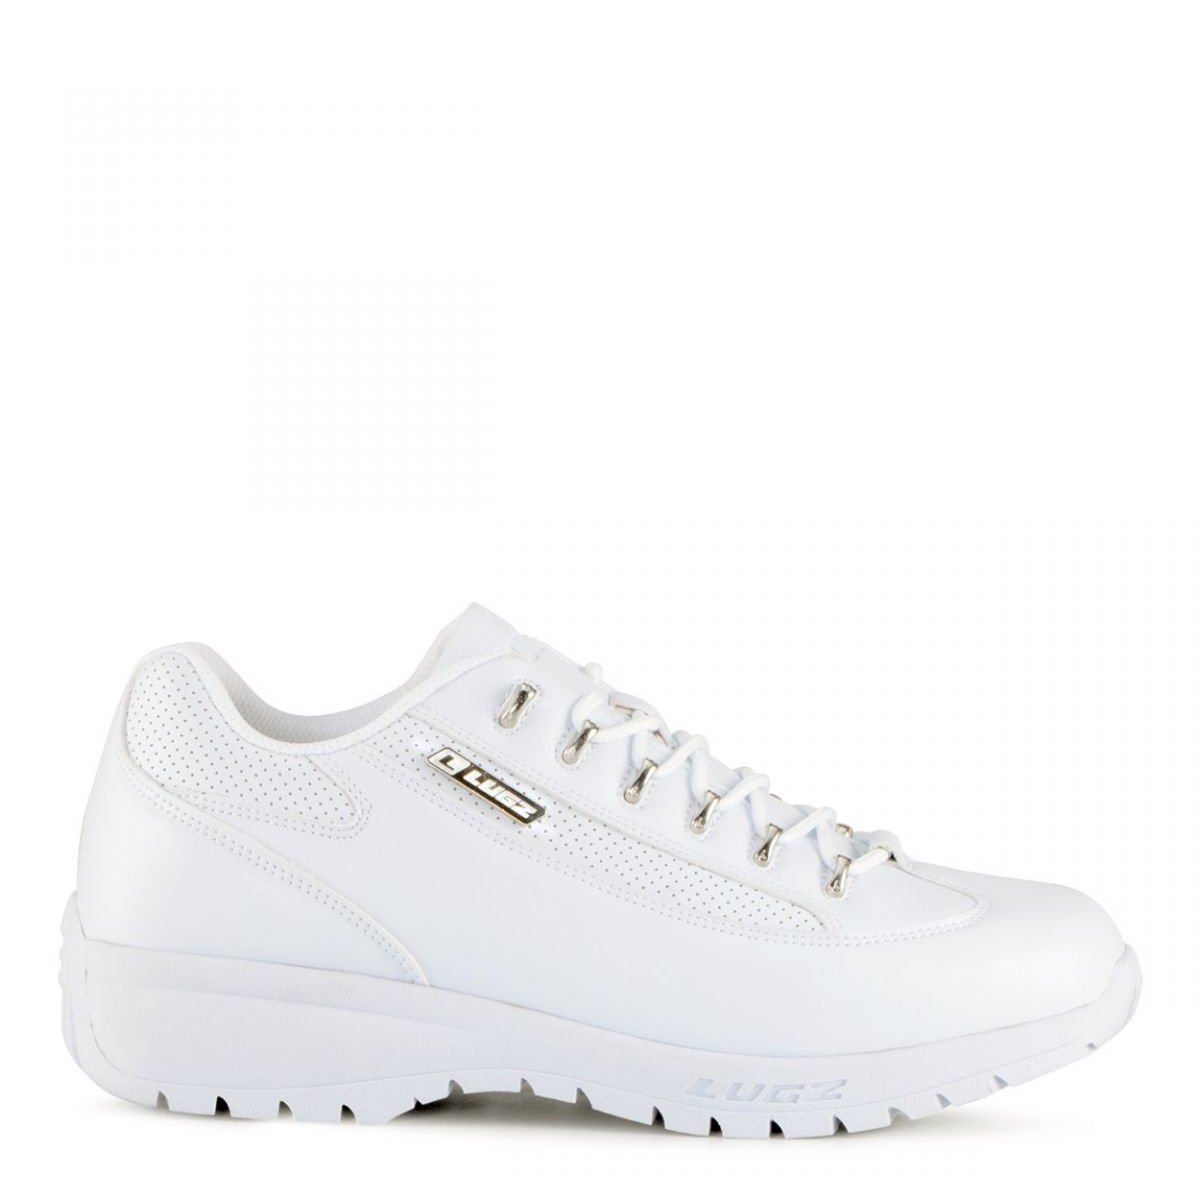 Lugz Men's Express Sneaker White - MEXPRSPV-100 WHITE - WHITE, 8